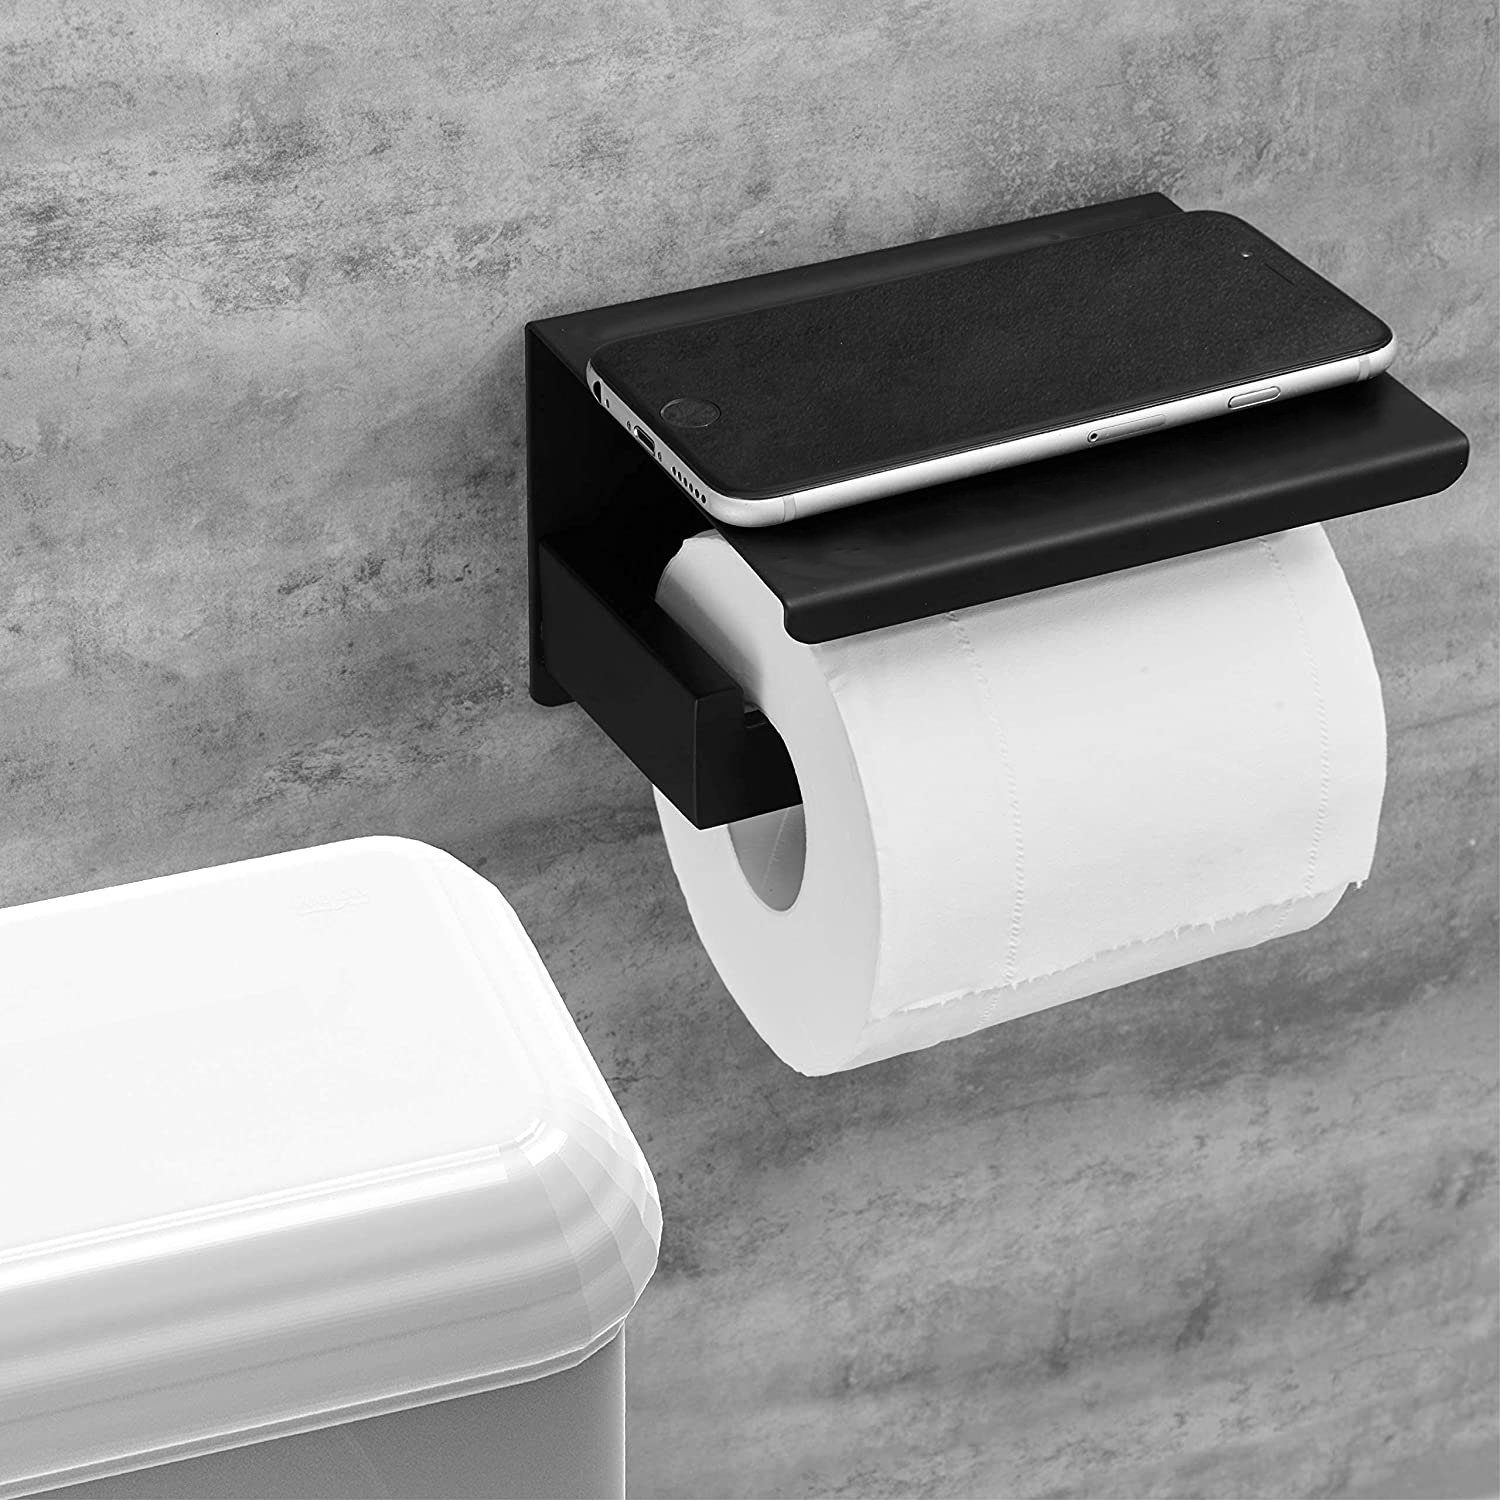 Selbstklebend Toilettenpapierhalter Edelstahl Toilettenpapierhalter ZAXSD Wandmontage Klopapierhalter, Bohren, Ohne Klorollenhalter